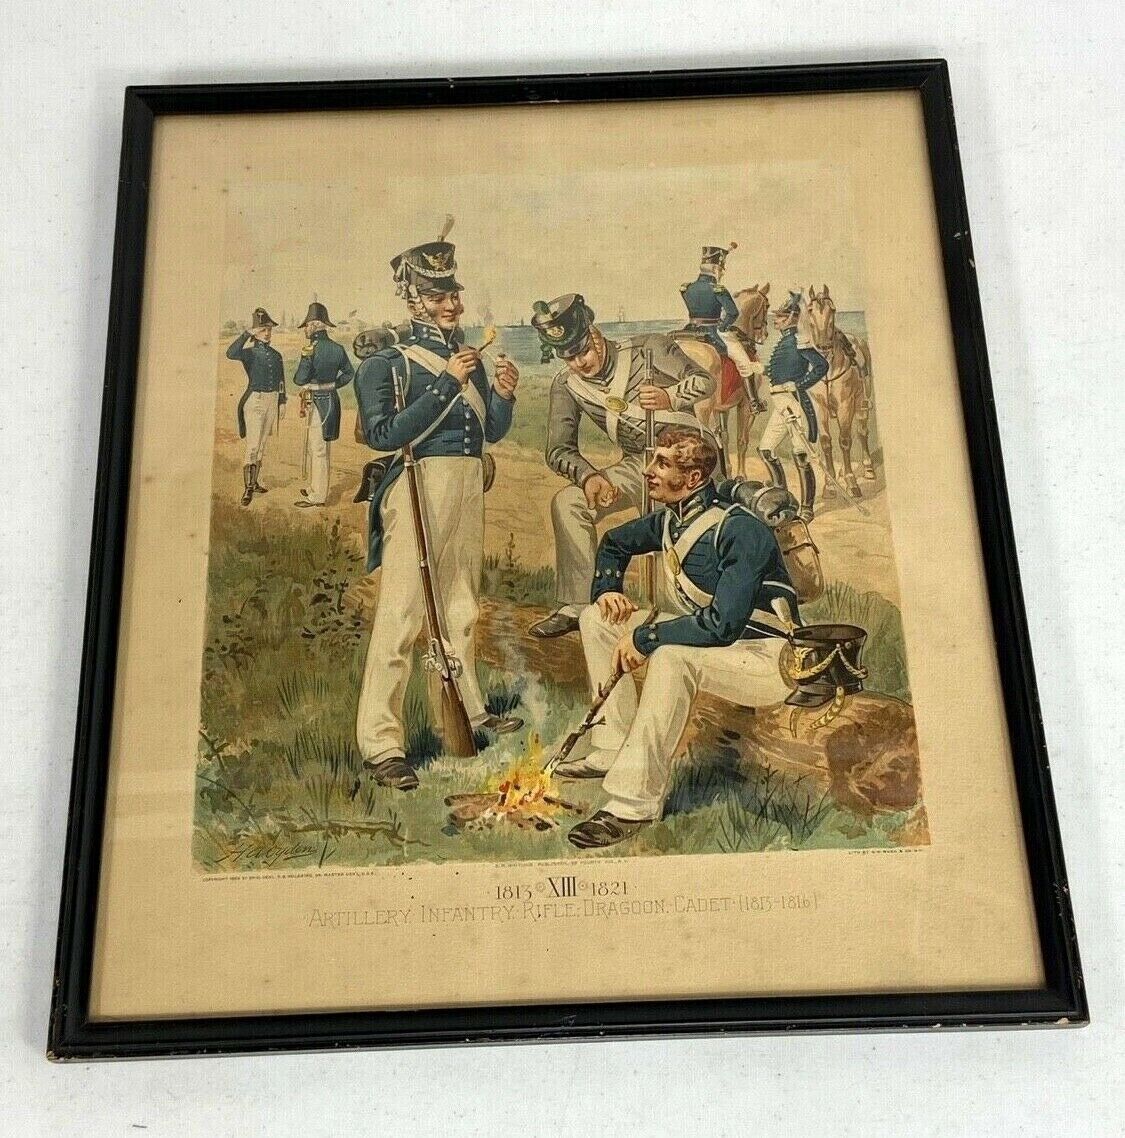 1885 US Army 1813-1821 Artillery Infantry Dragoon Cadet Framed Print